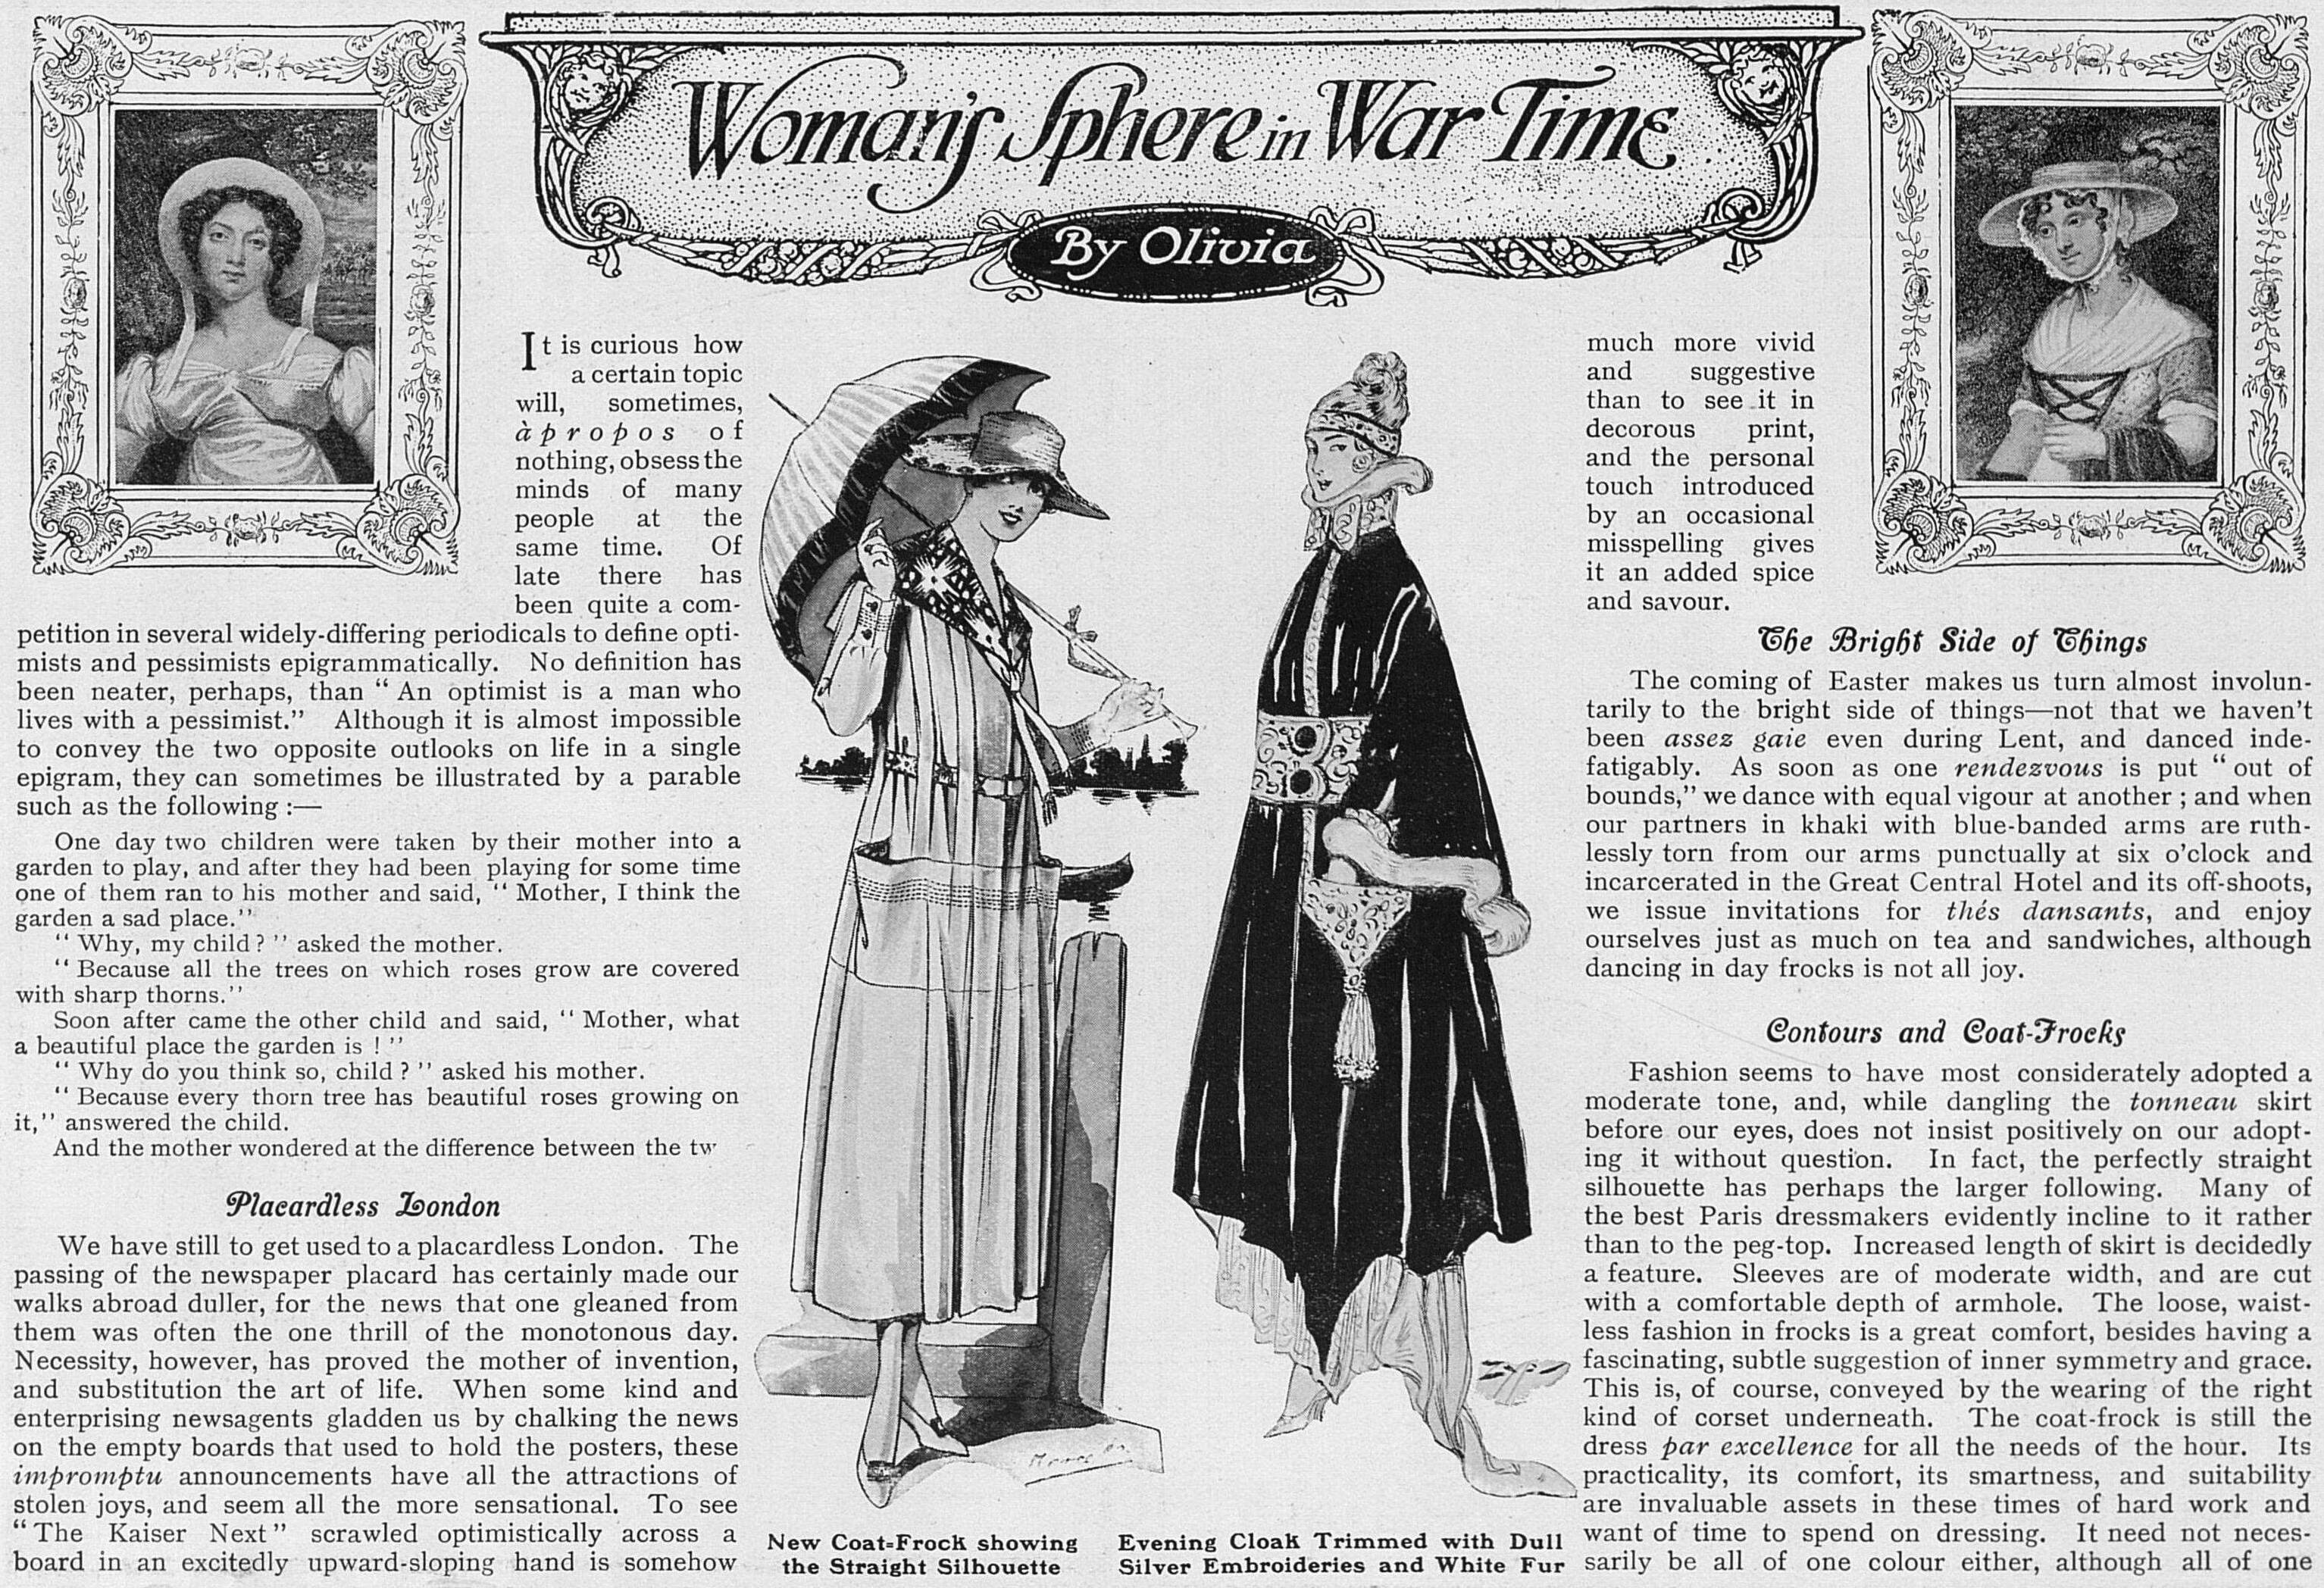 WomansSphereInWarTime_7Apr1917